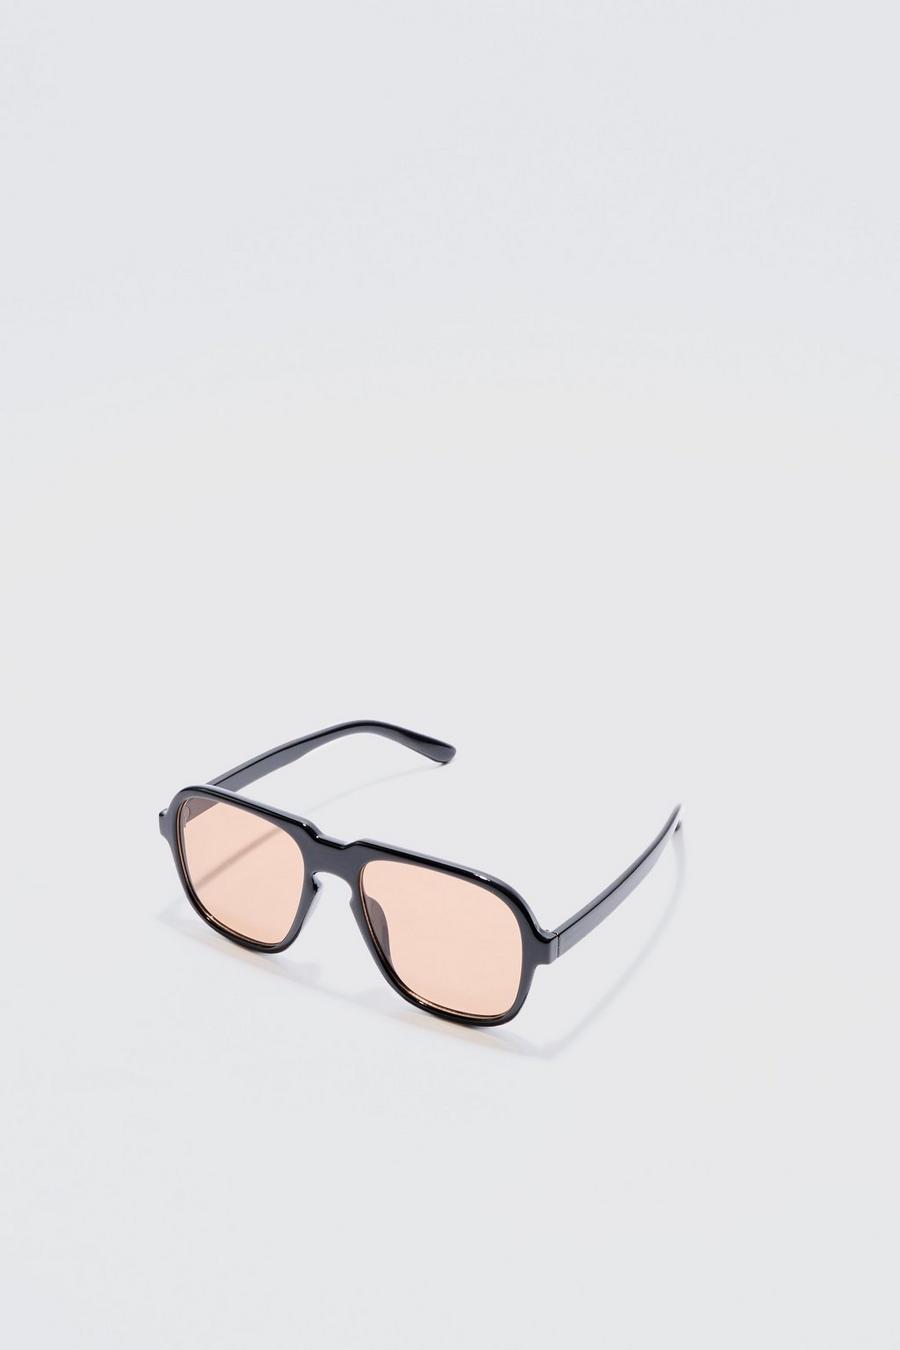 Black Retro High Brow Sunglasses With Brown Lens